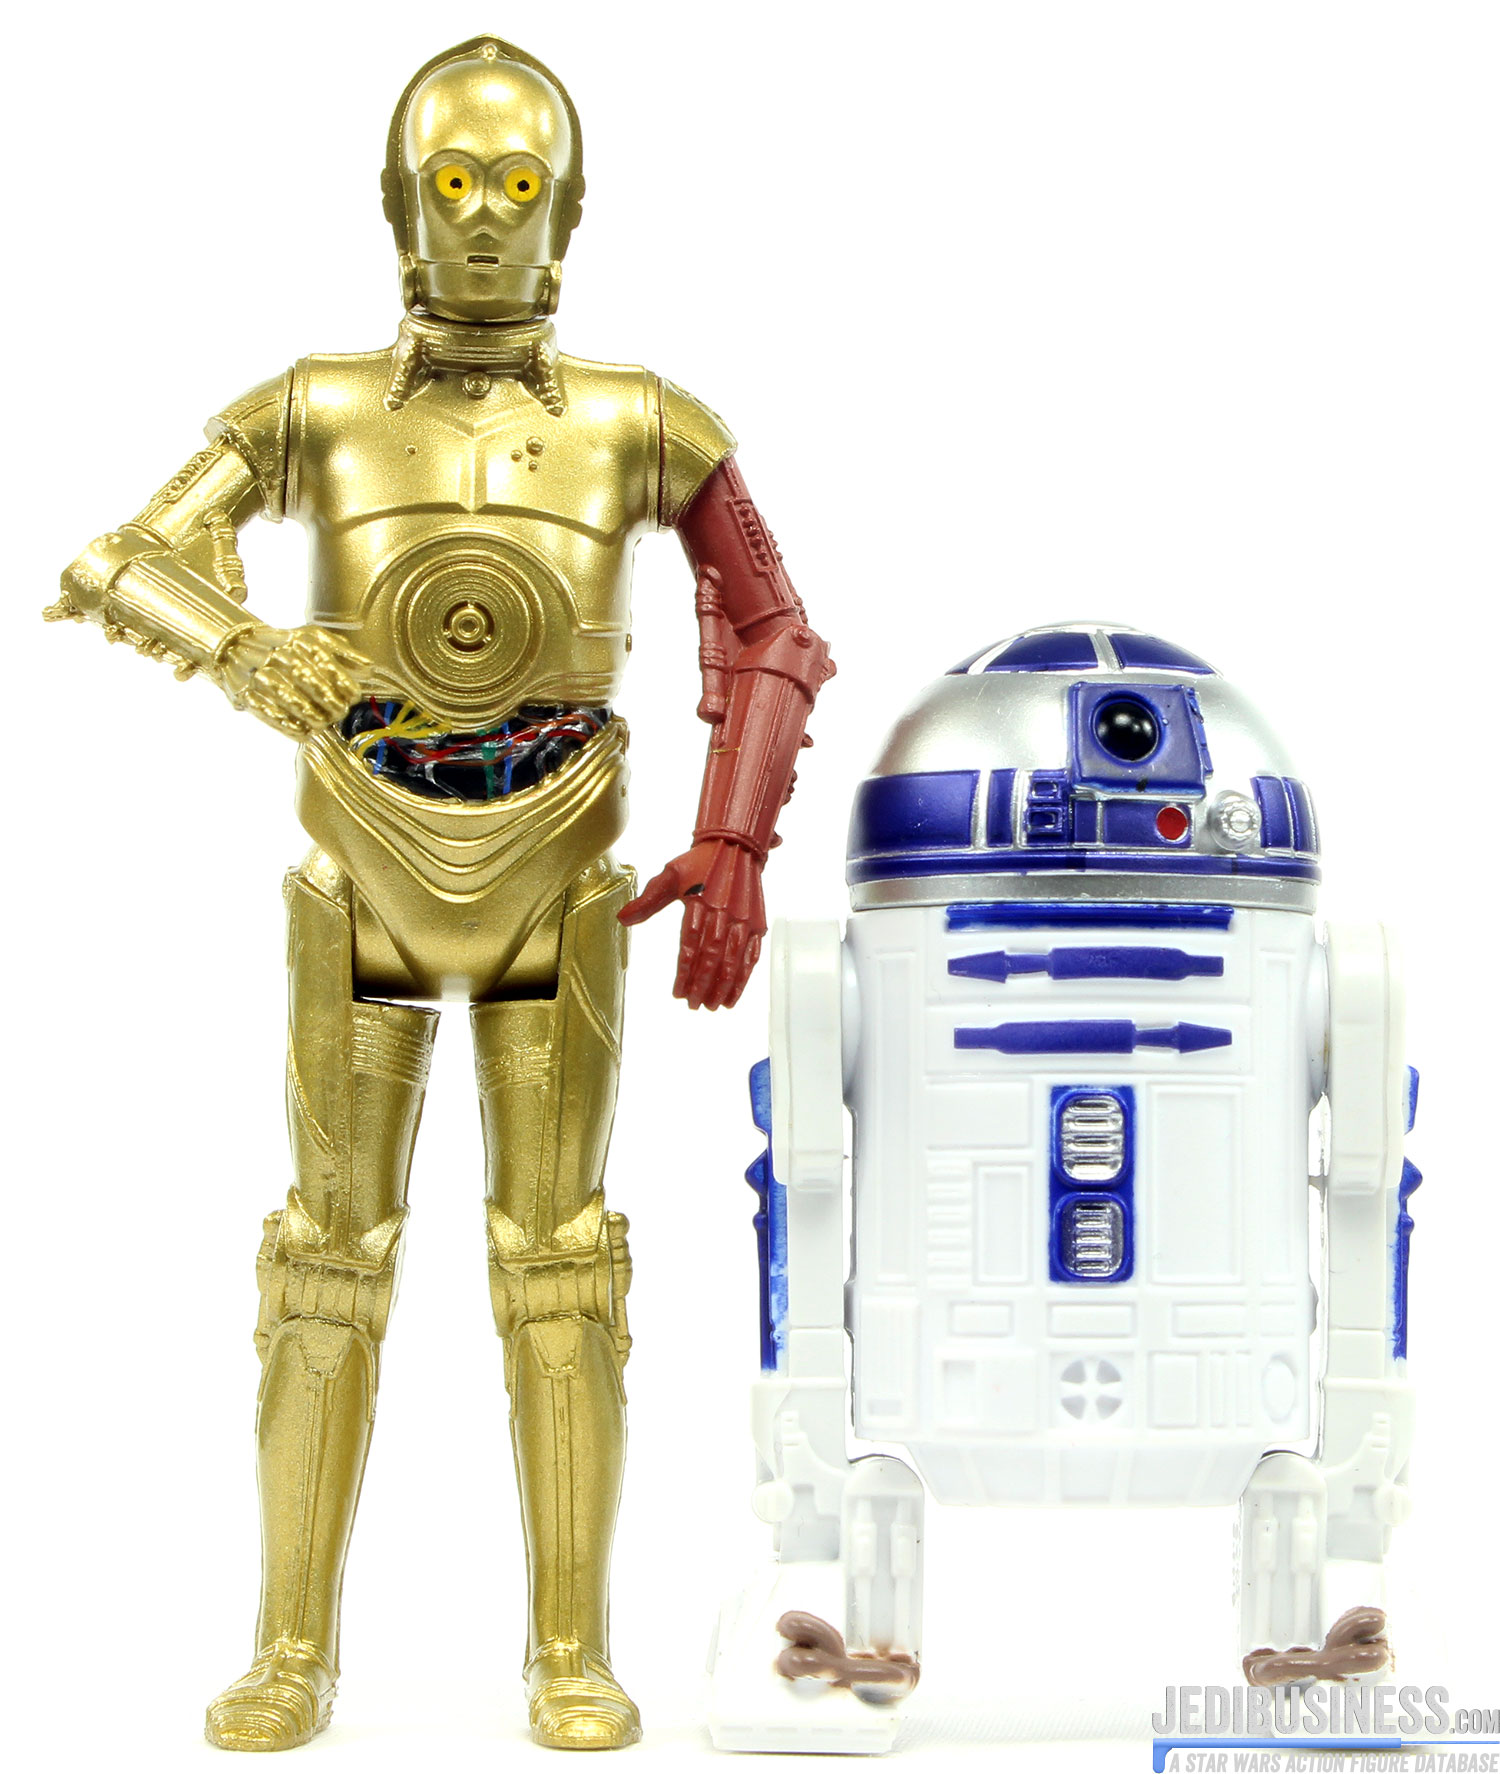 C-3PO The Force Awakens Set #2